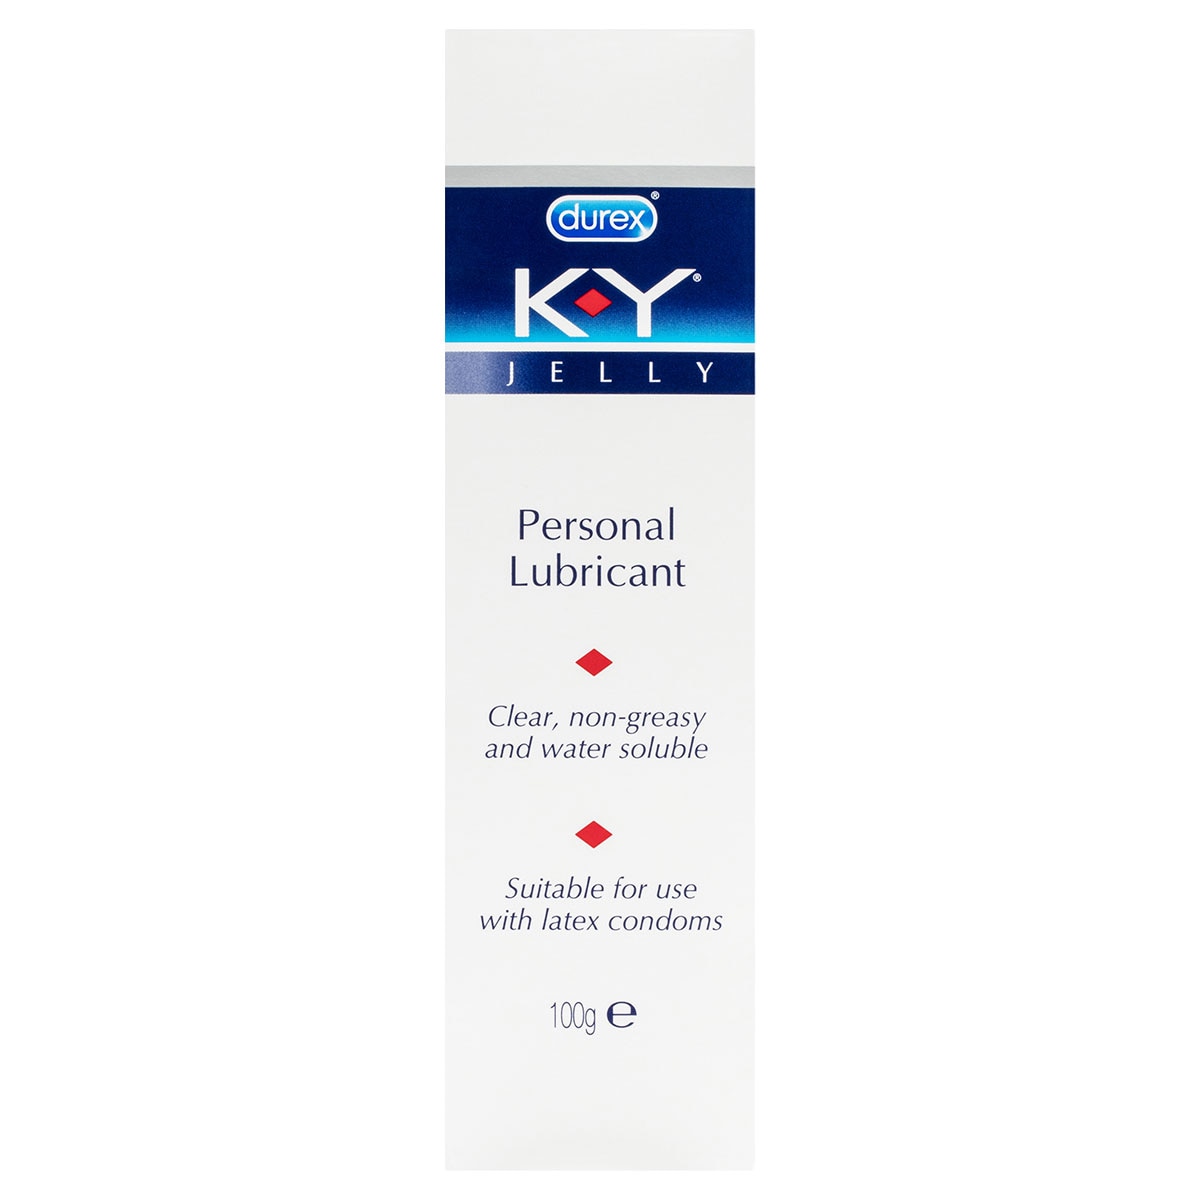 Durex K-Y Jelly Personal Lubricant 100g